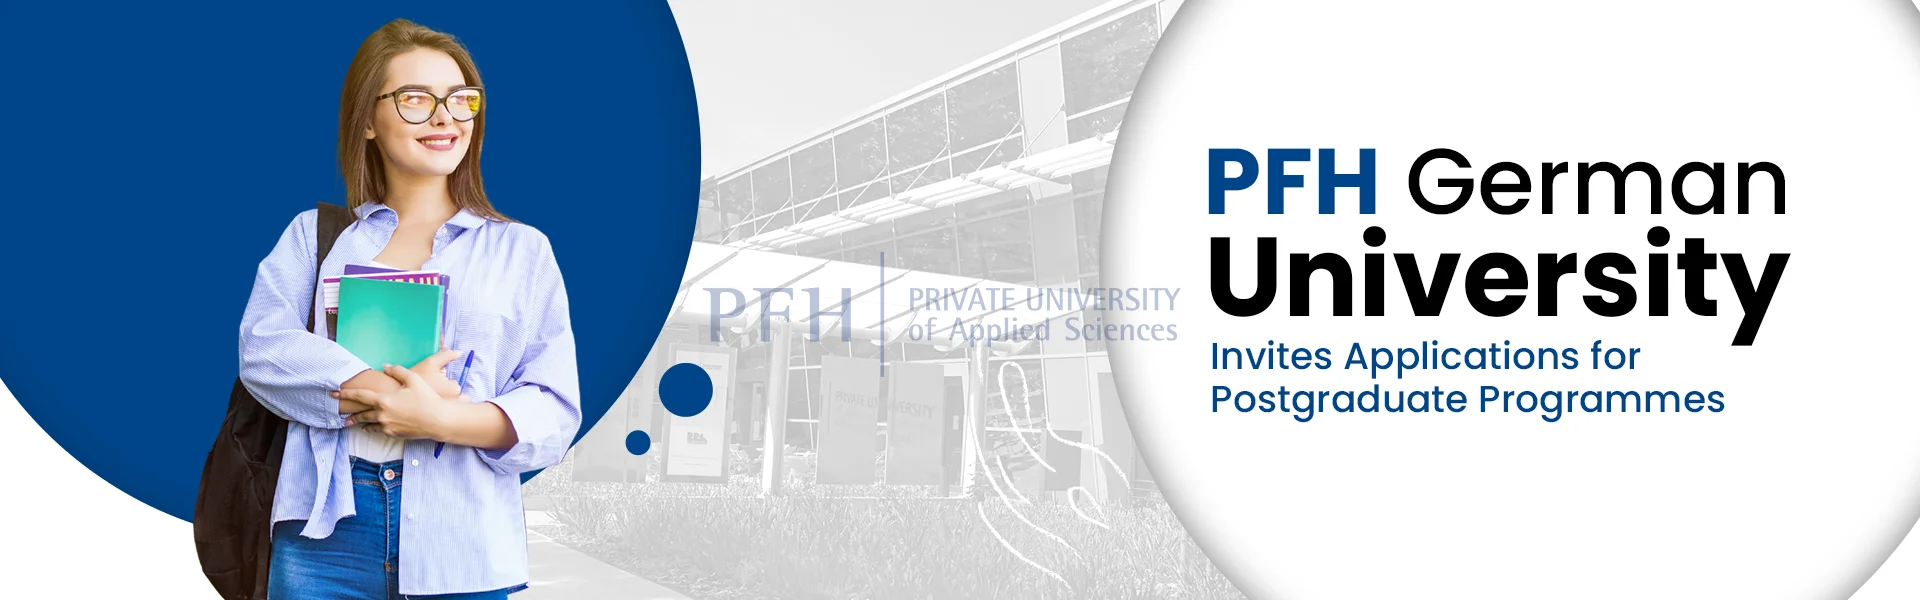 PFH German University invites applications for postgraduate programmes